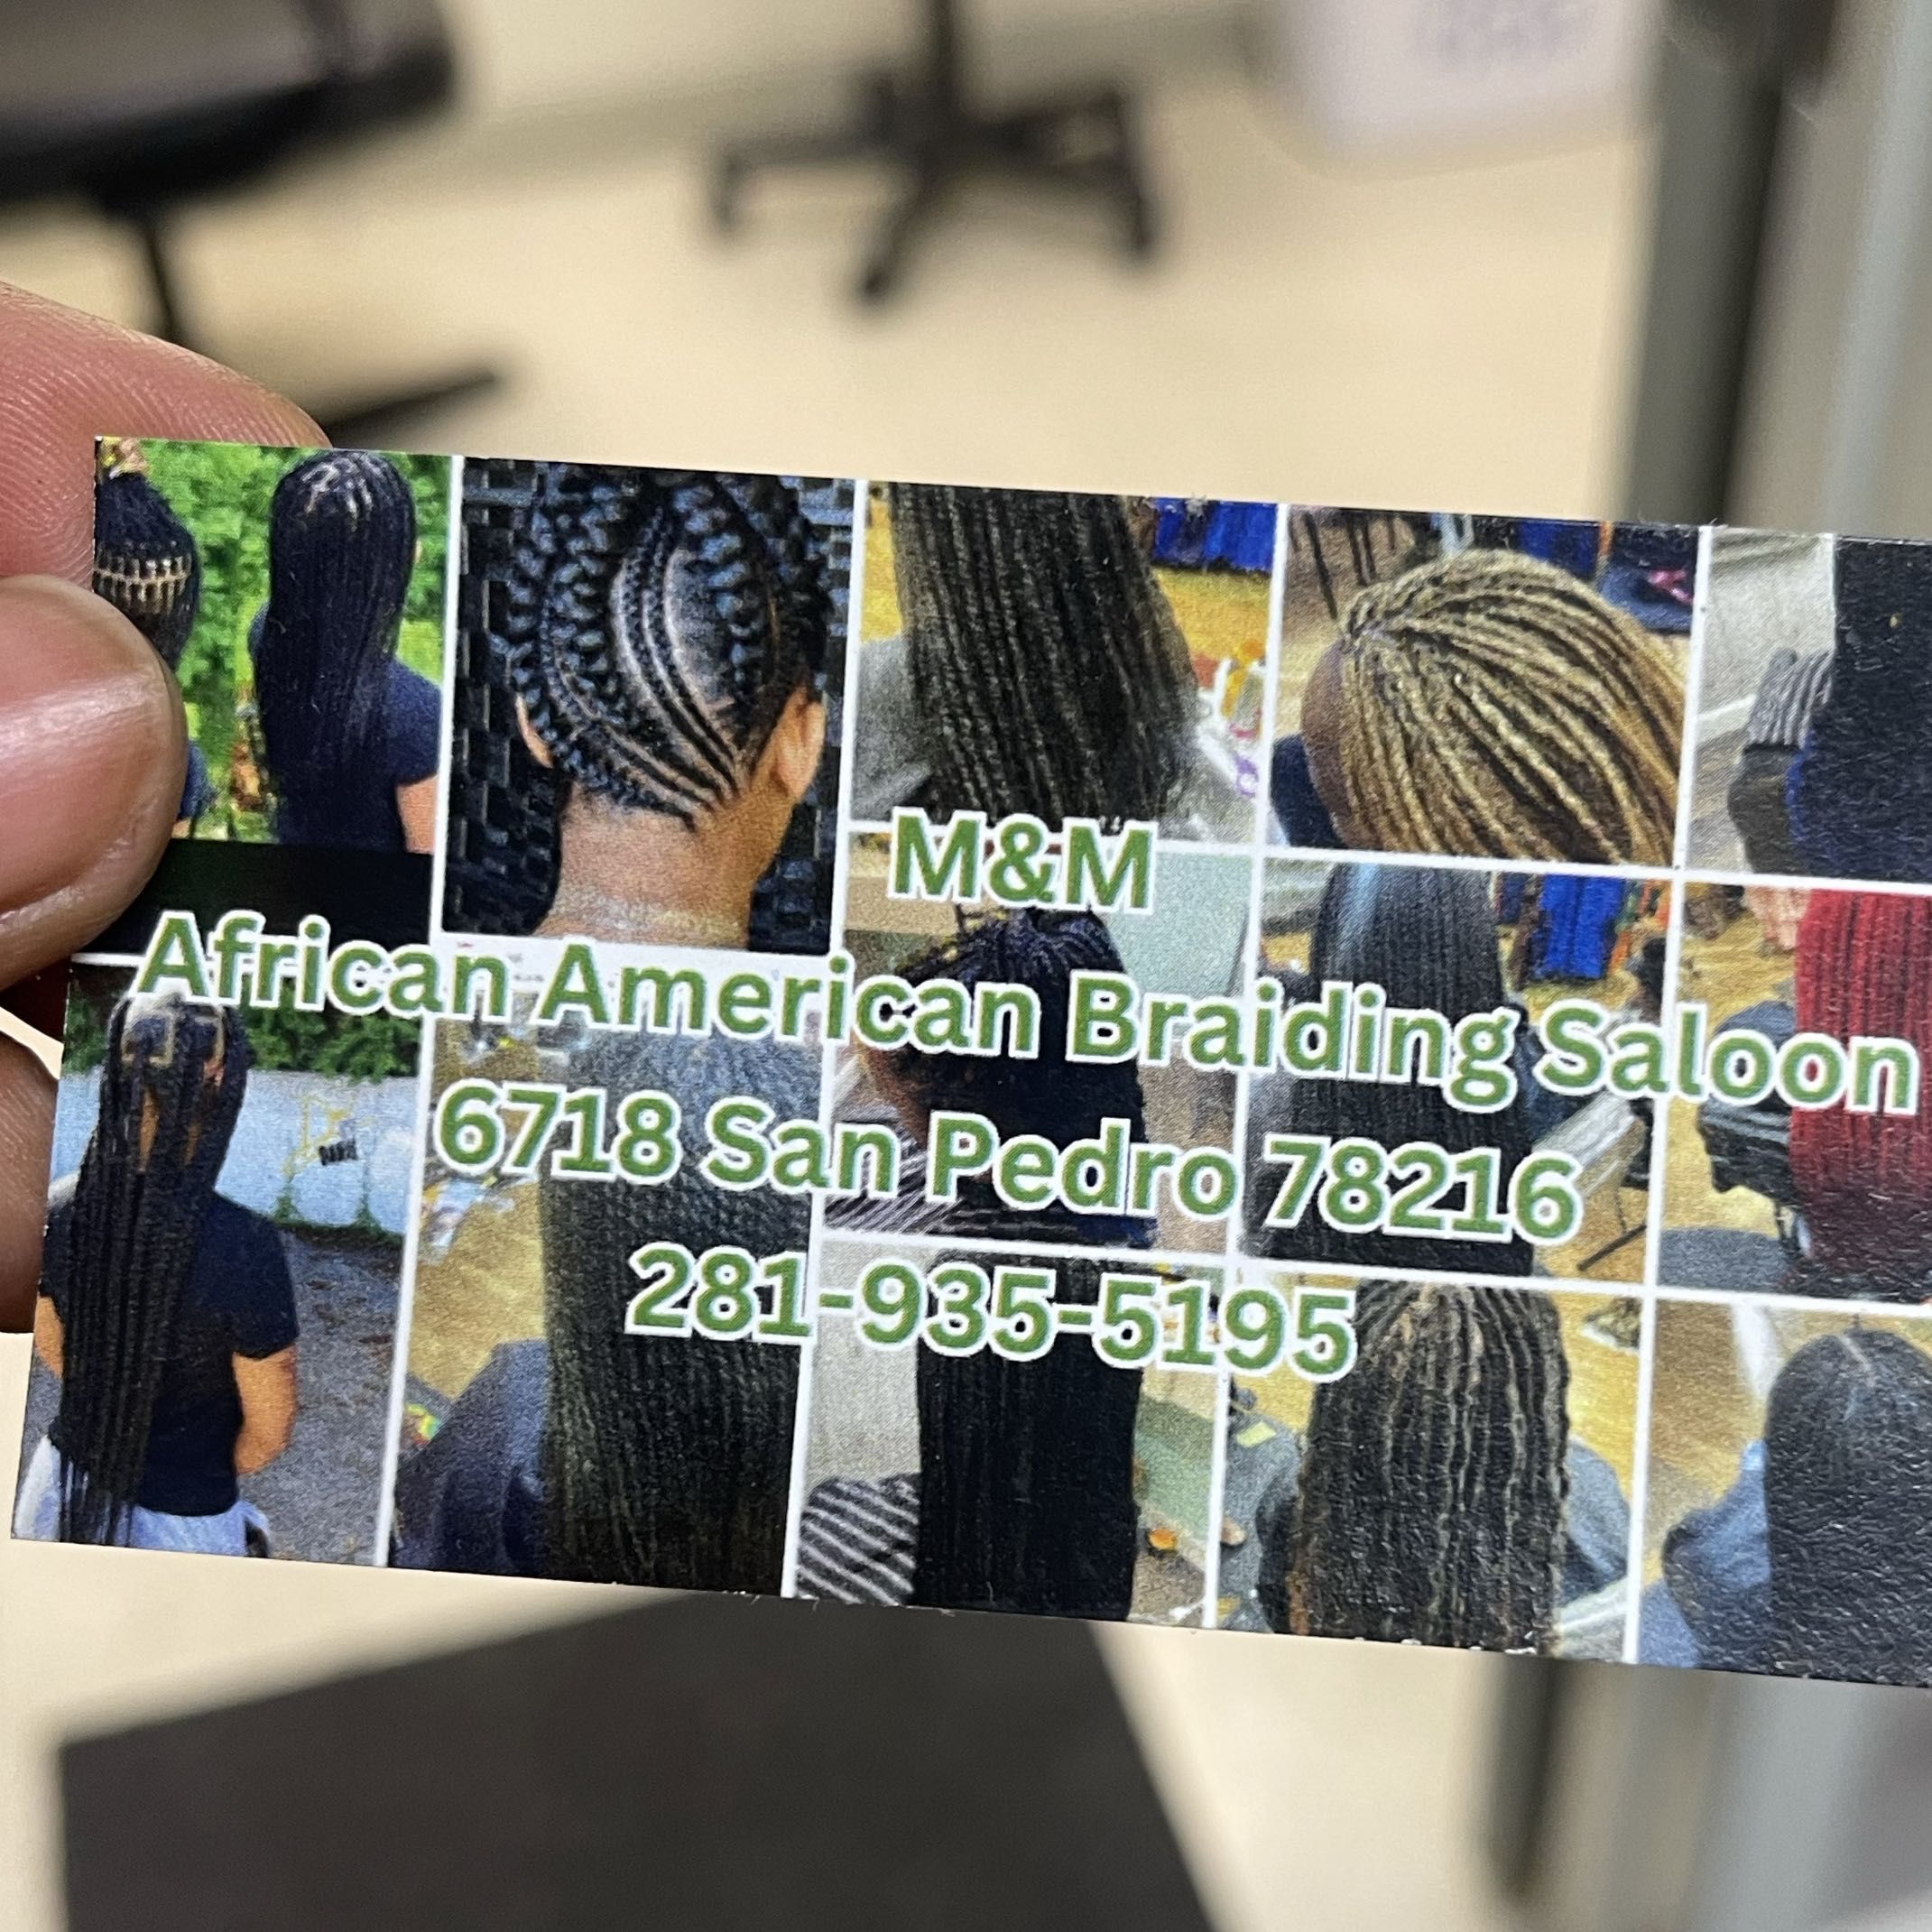 M&M Africa American hair braiding, 6718 San Pedro Ave, 6918, San Antonio, 78216